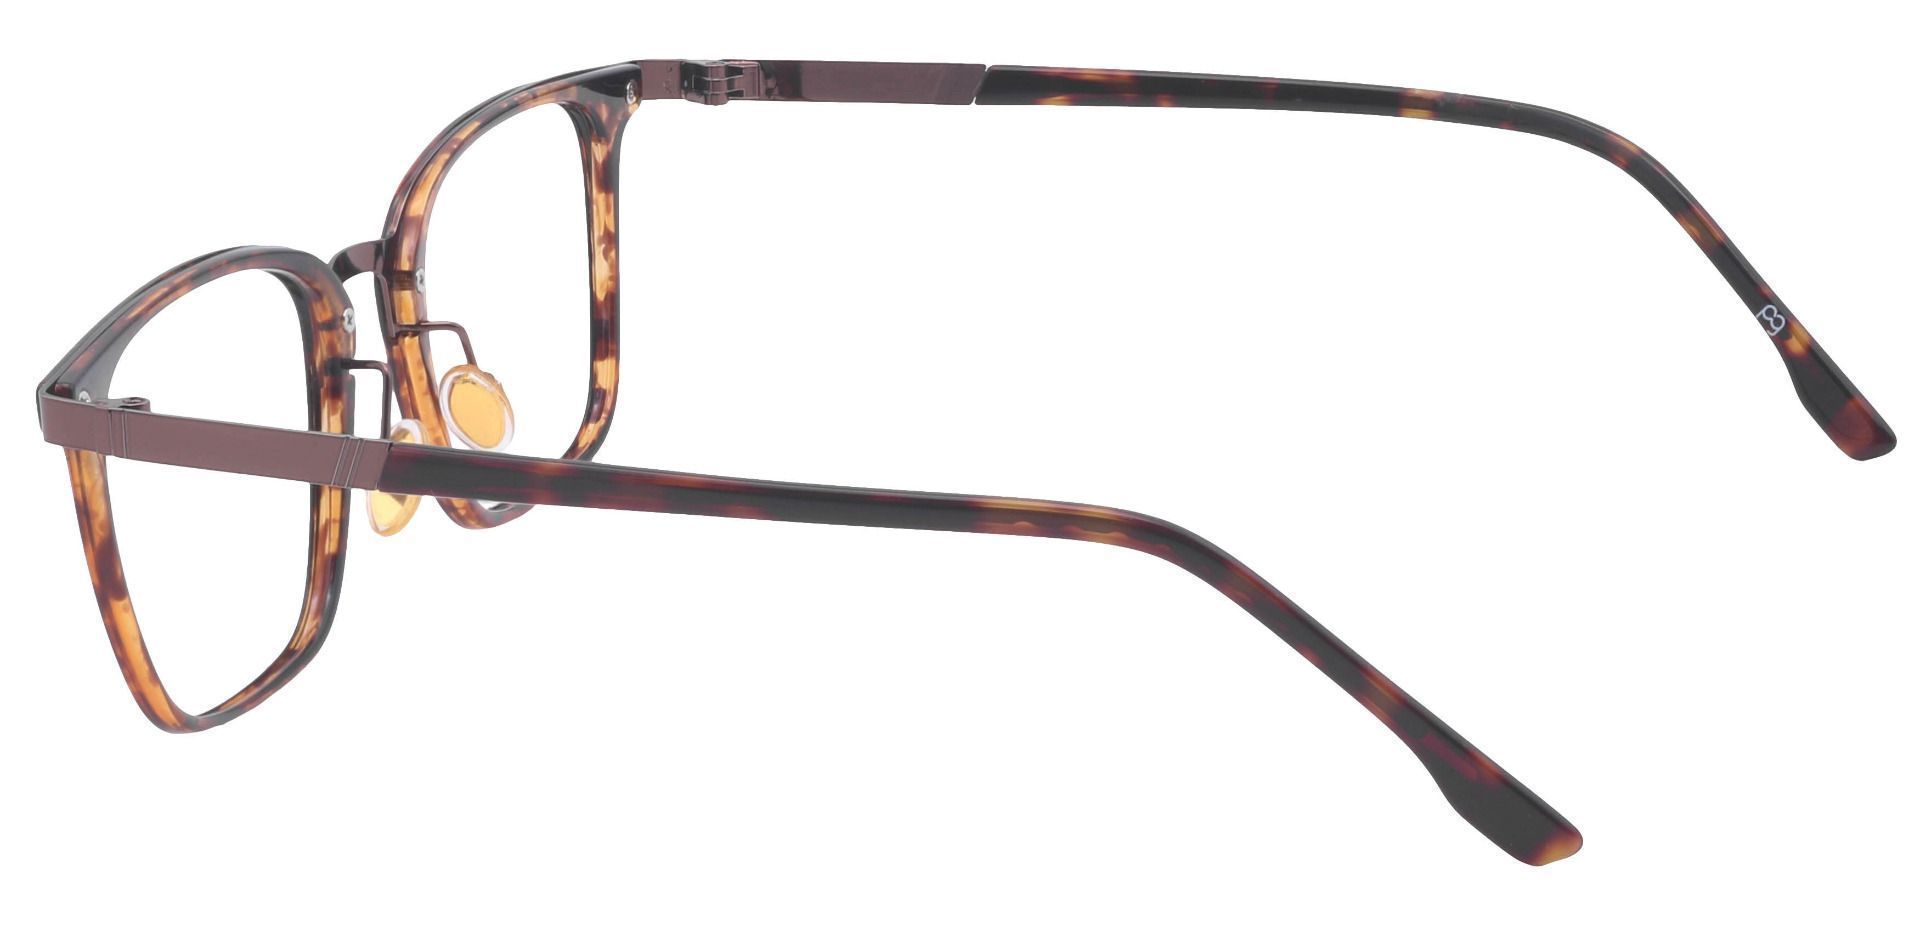 Rigby Oval Prescription Glasses - Leopard